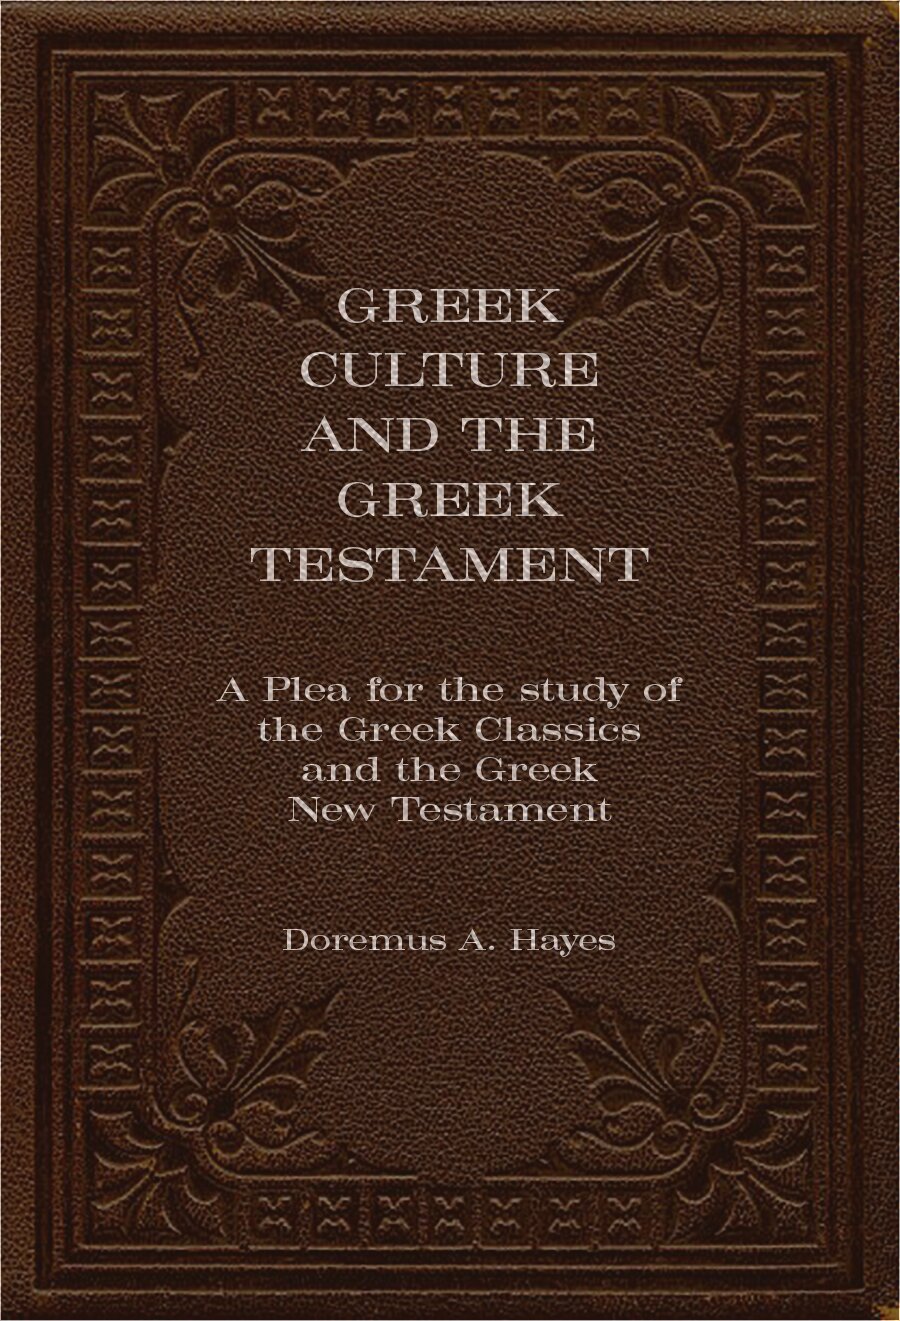 Greek Culture and the Greek Testament: A Plea for the Study of the Greek Classics and the Greek New Testament